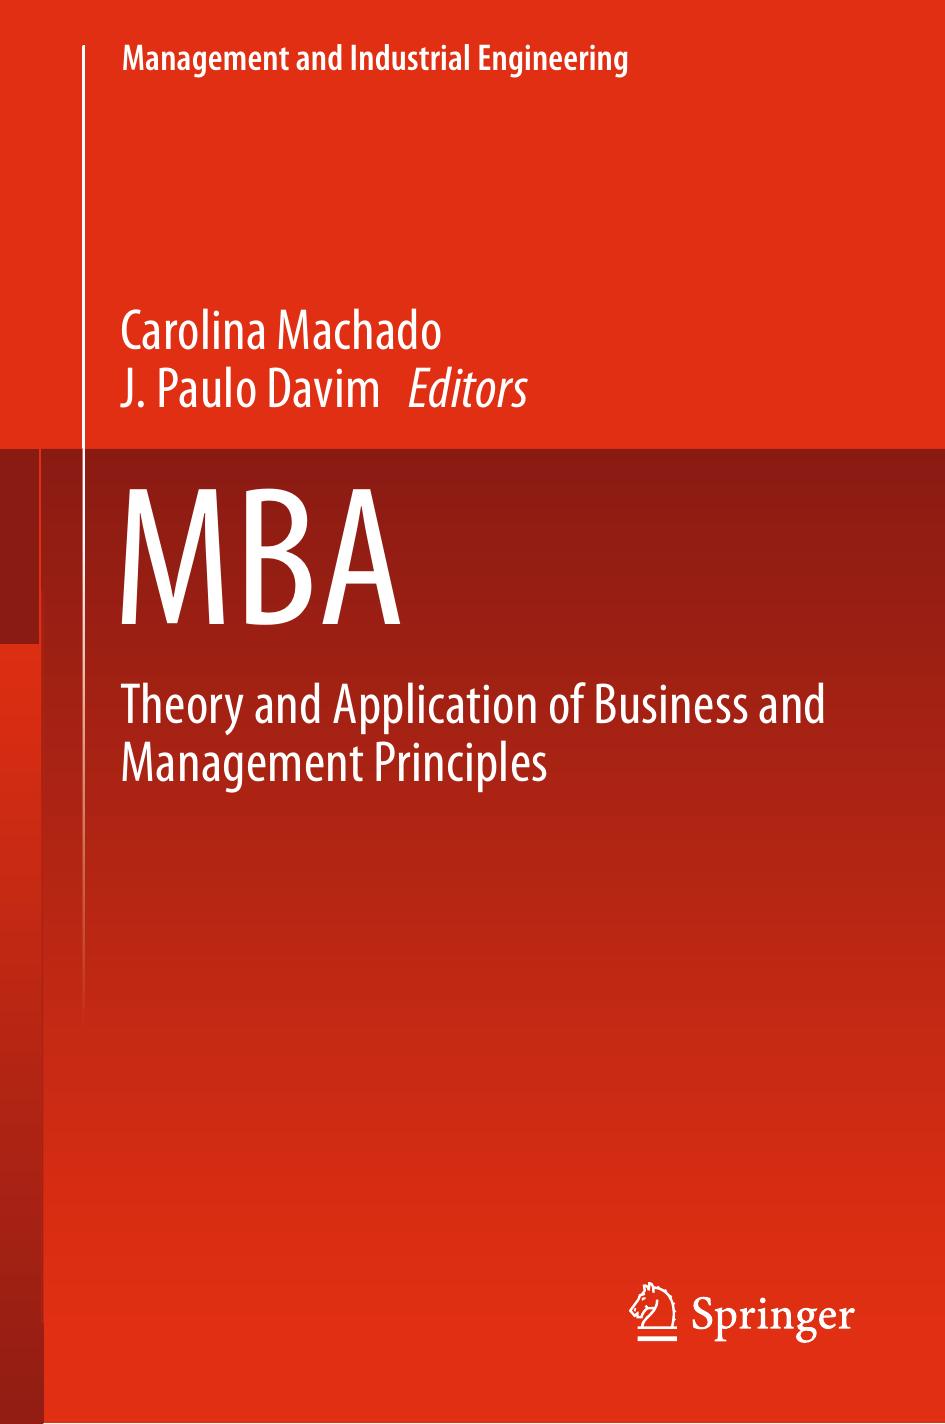 MBA Theory and Application of Business and Management Principles by Carolina Machado, J. Paulo Davim 2016